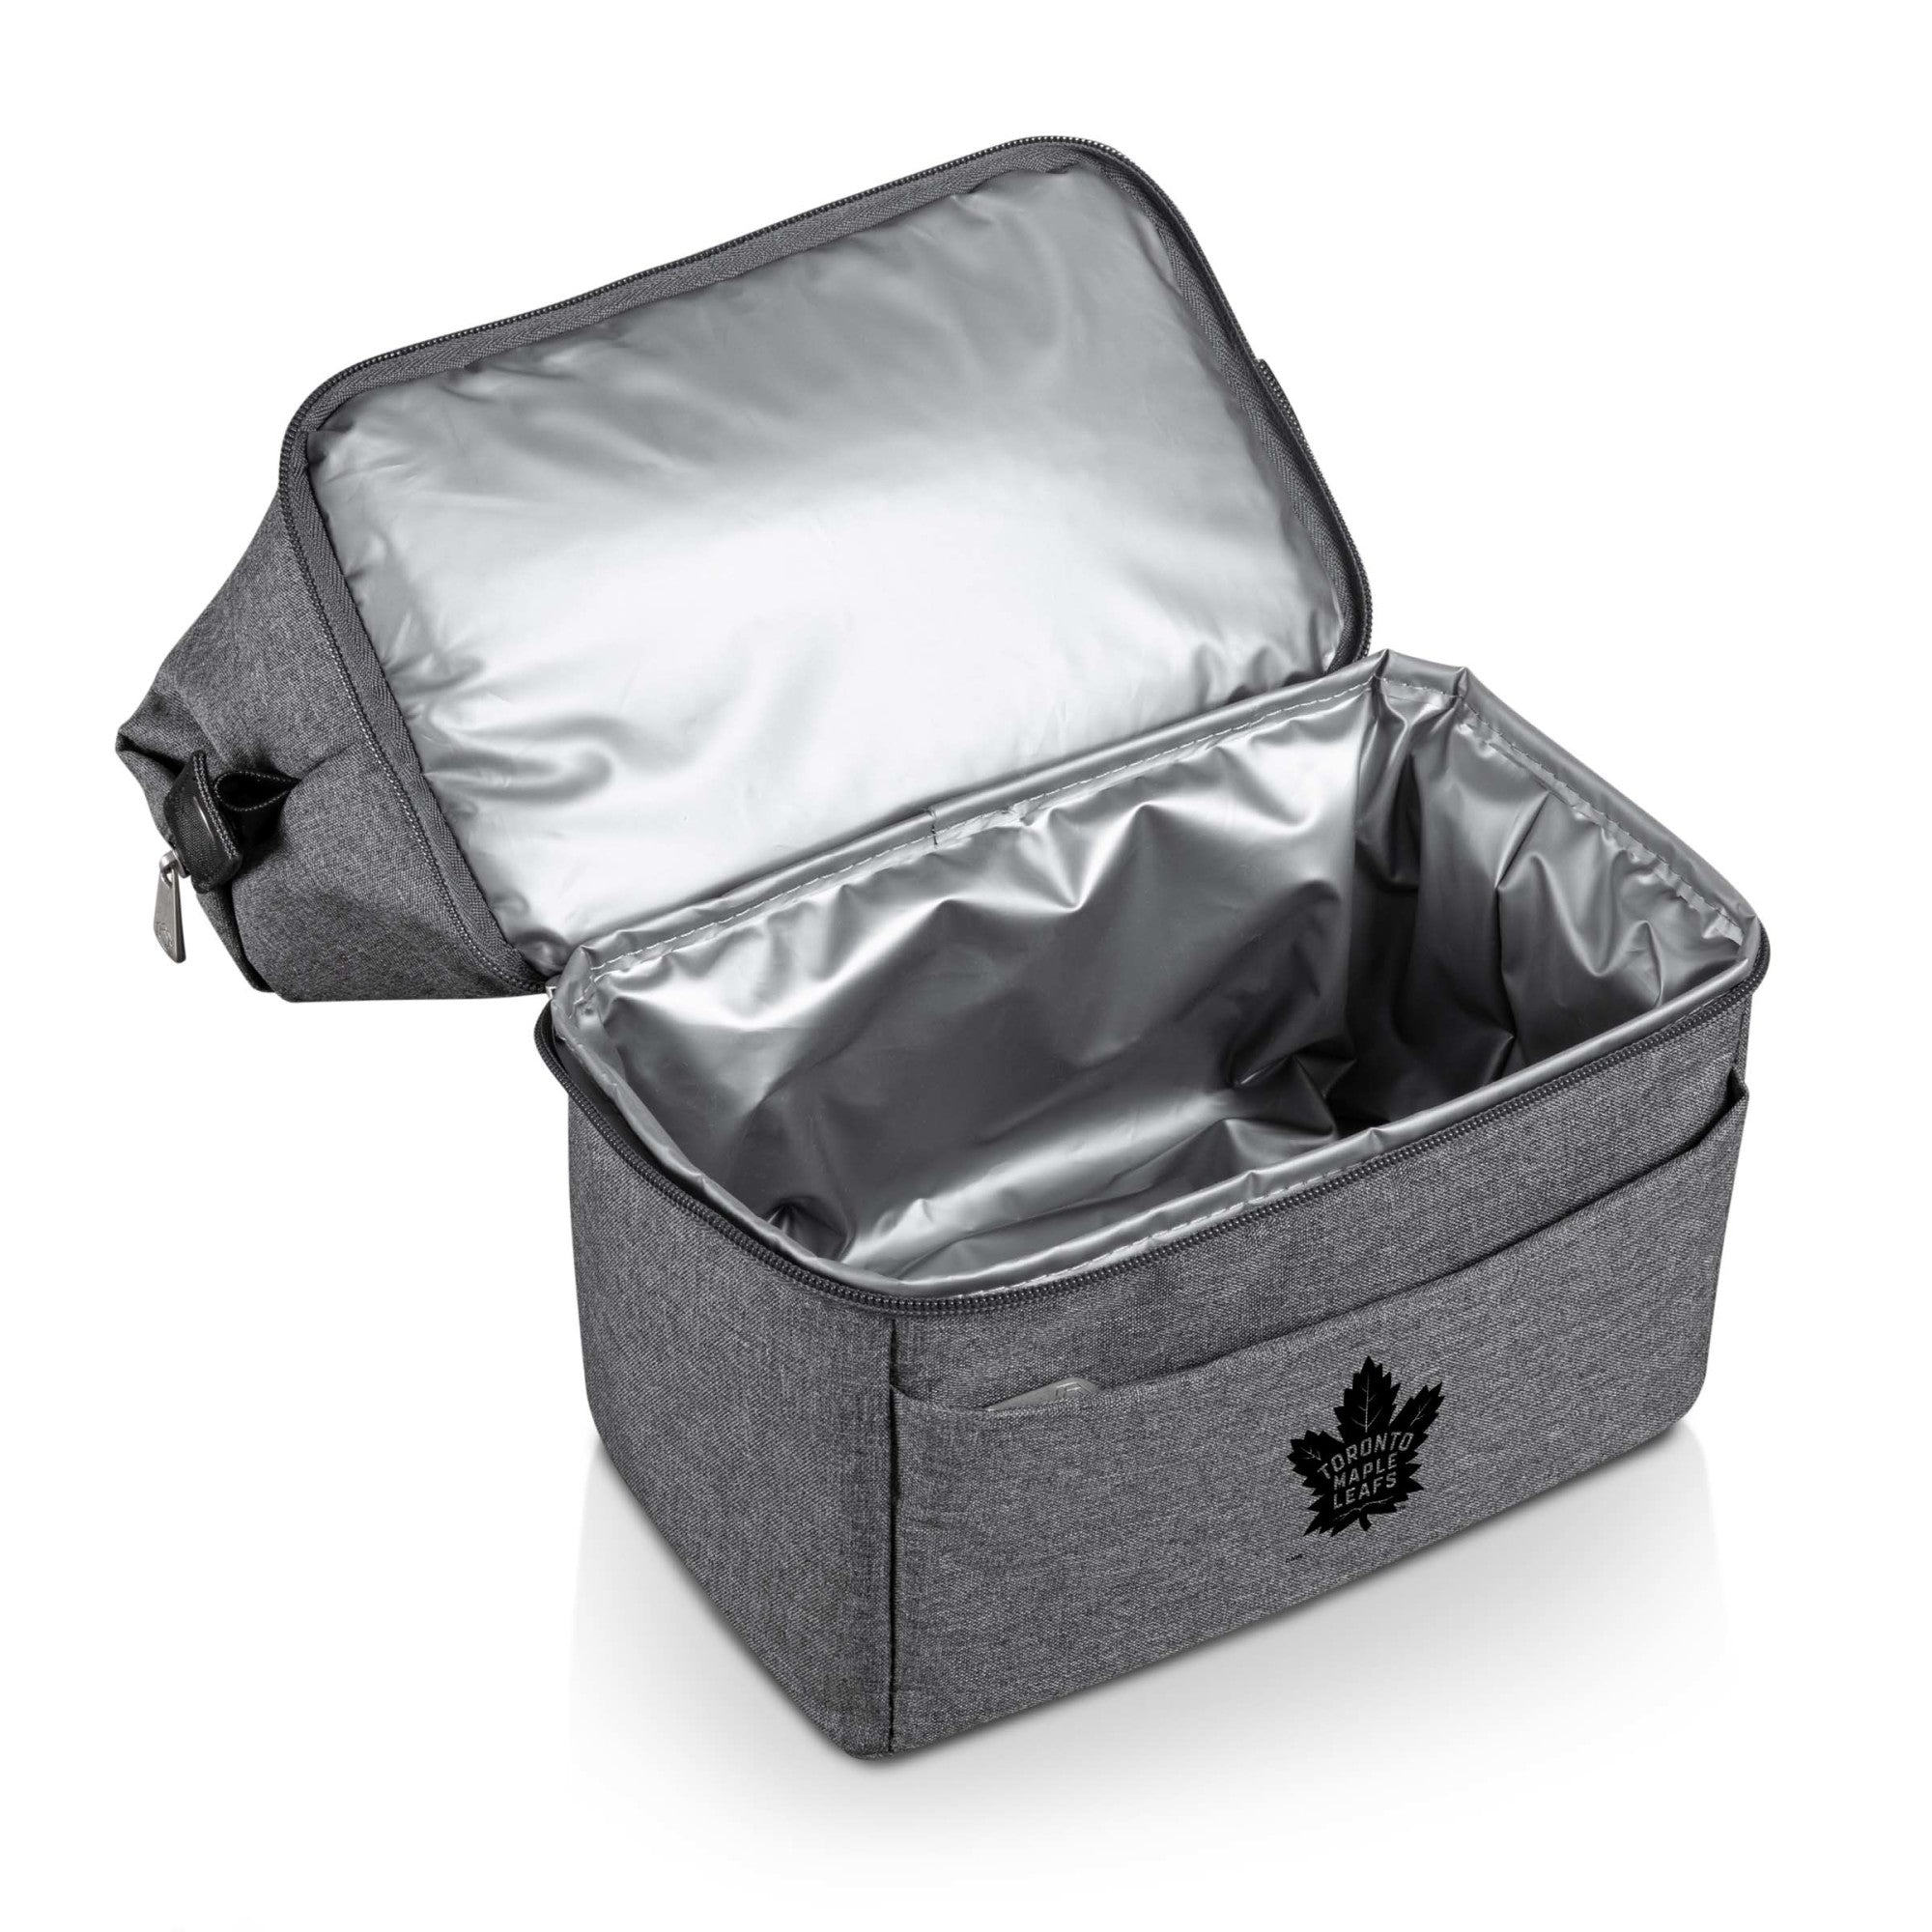 Toronto Maple Leafs - Urban Lunch Bag Cooler